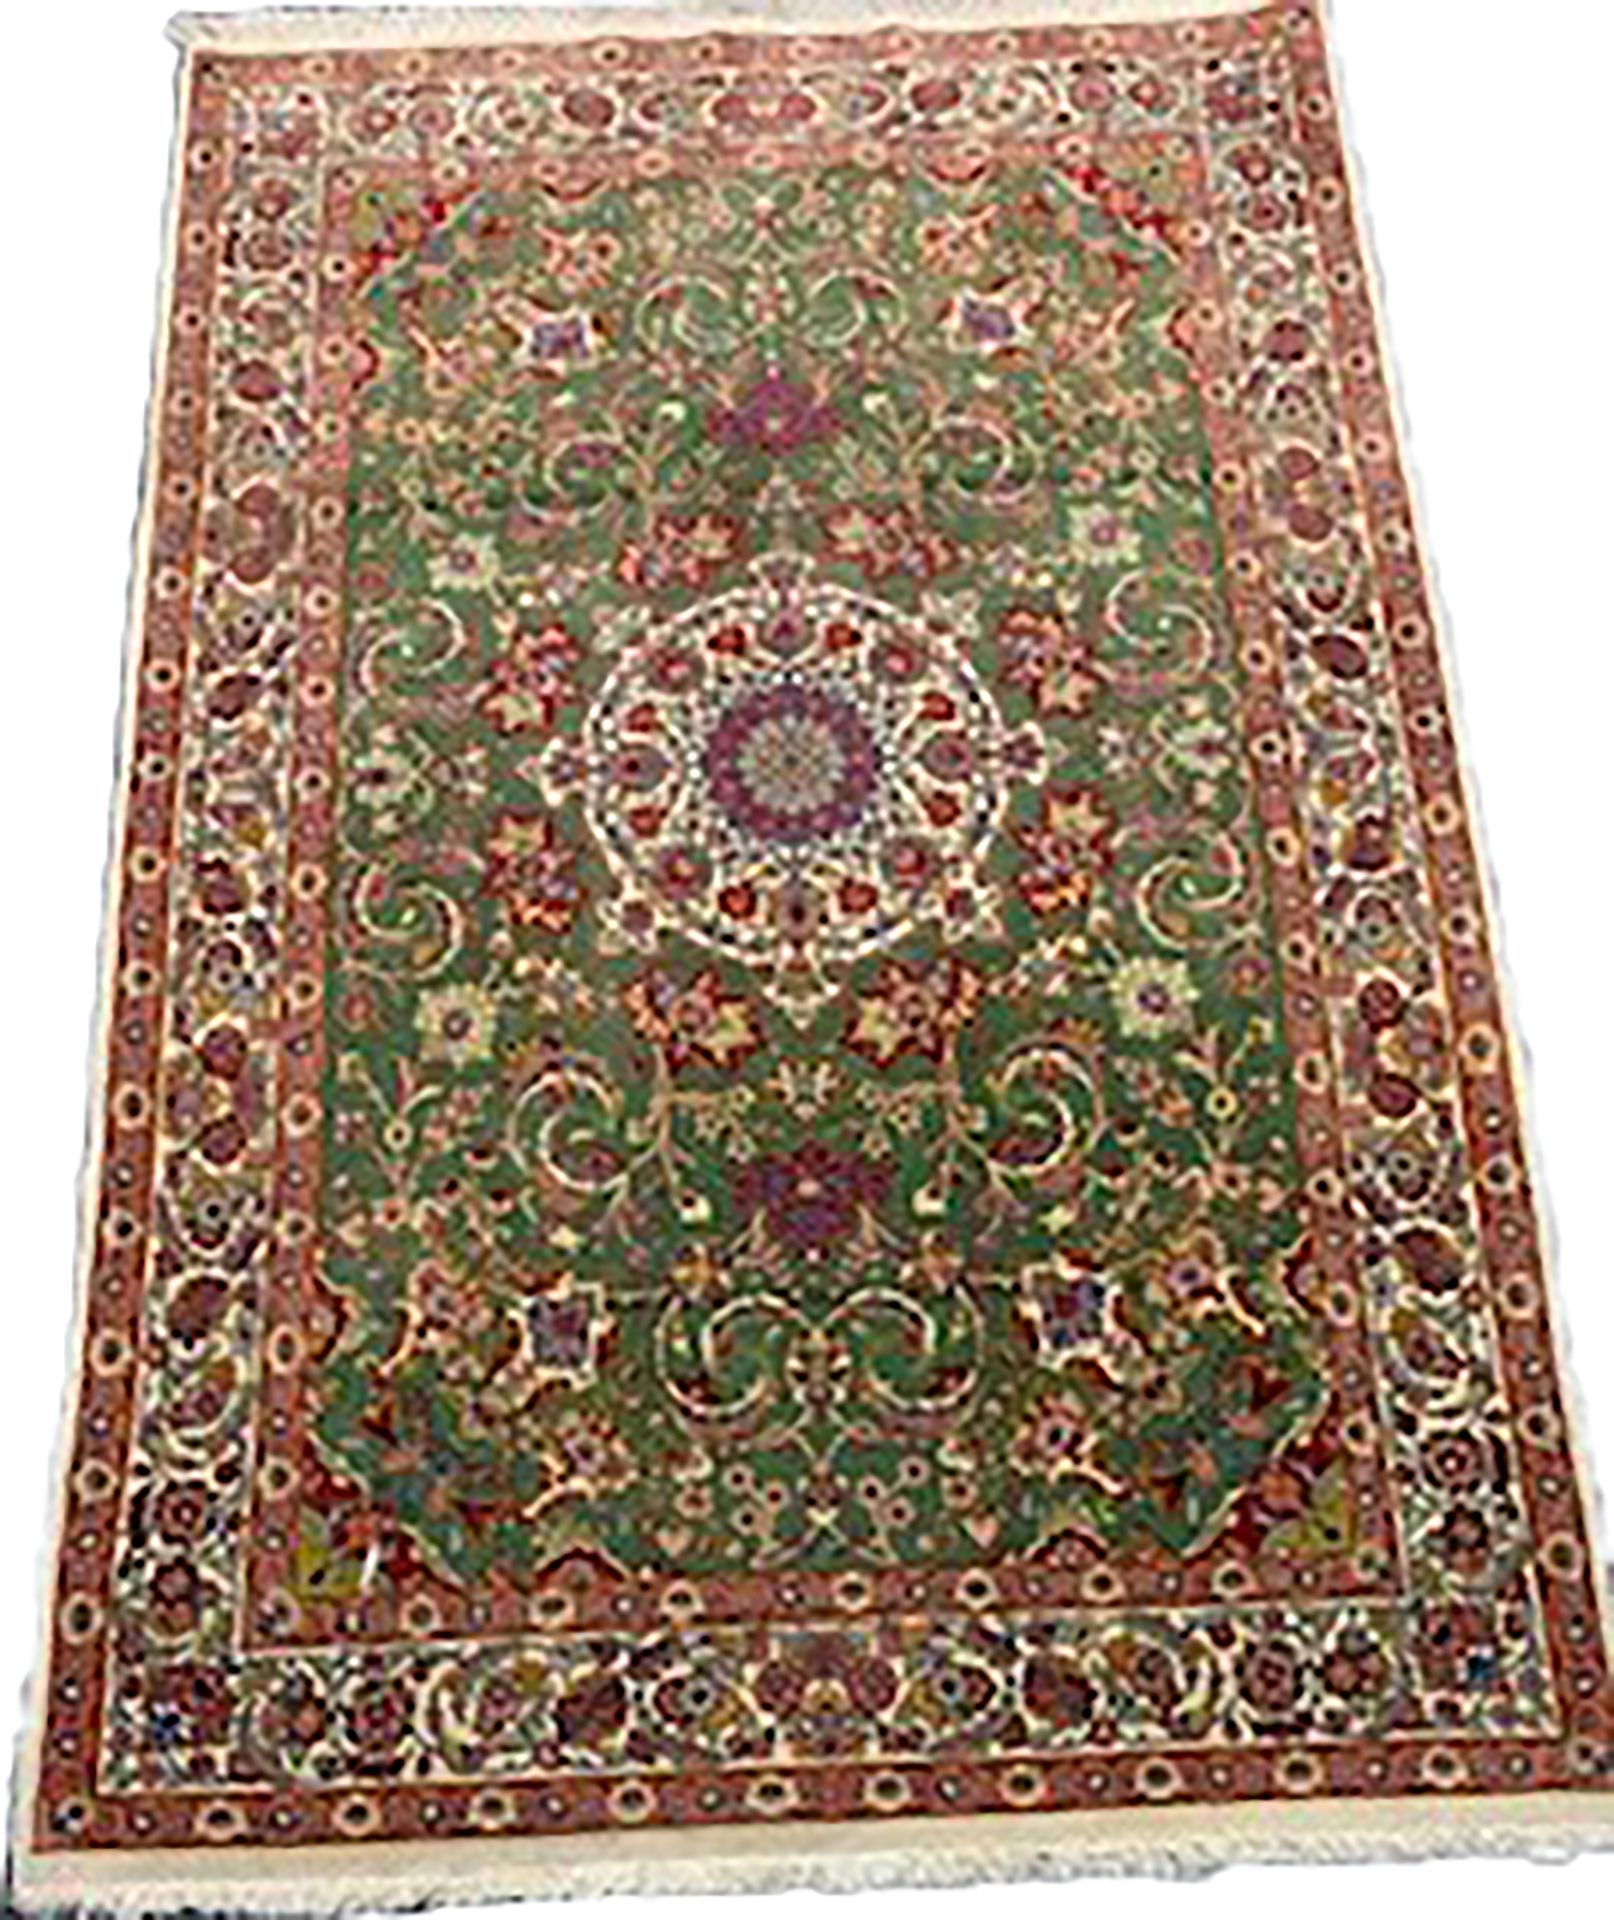 Null 杰出和非常精美的大不里士羊毛和丝绸地毯 - 伊朗，20世纪中期

尺寸：200 x 133 cm

技术特征 : 丝质羊羔绒，花被丝包围着

在棉花的&hellip;